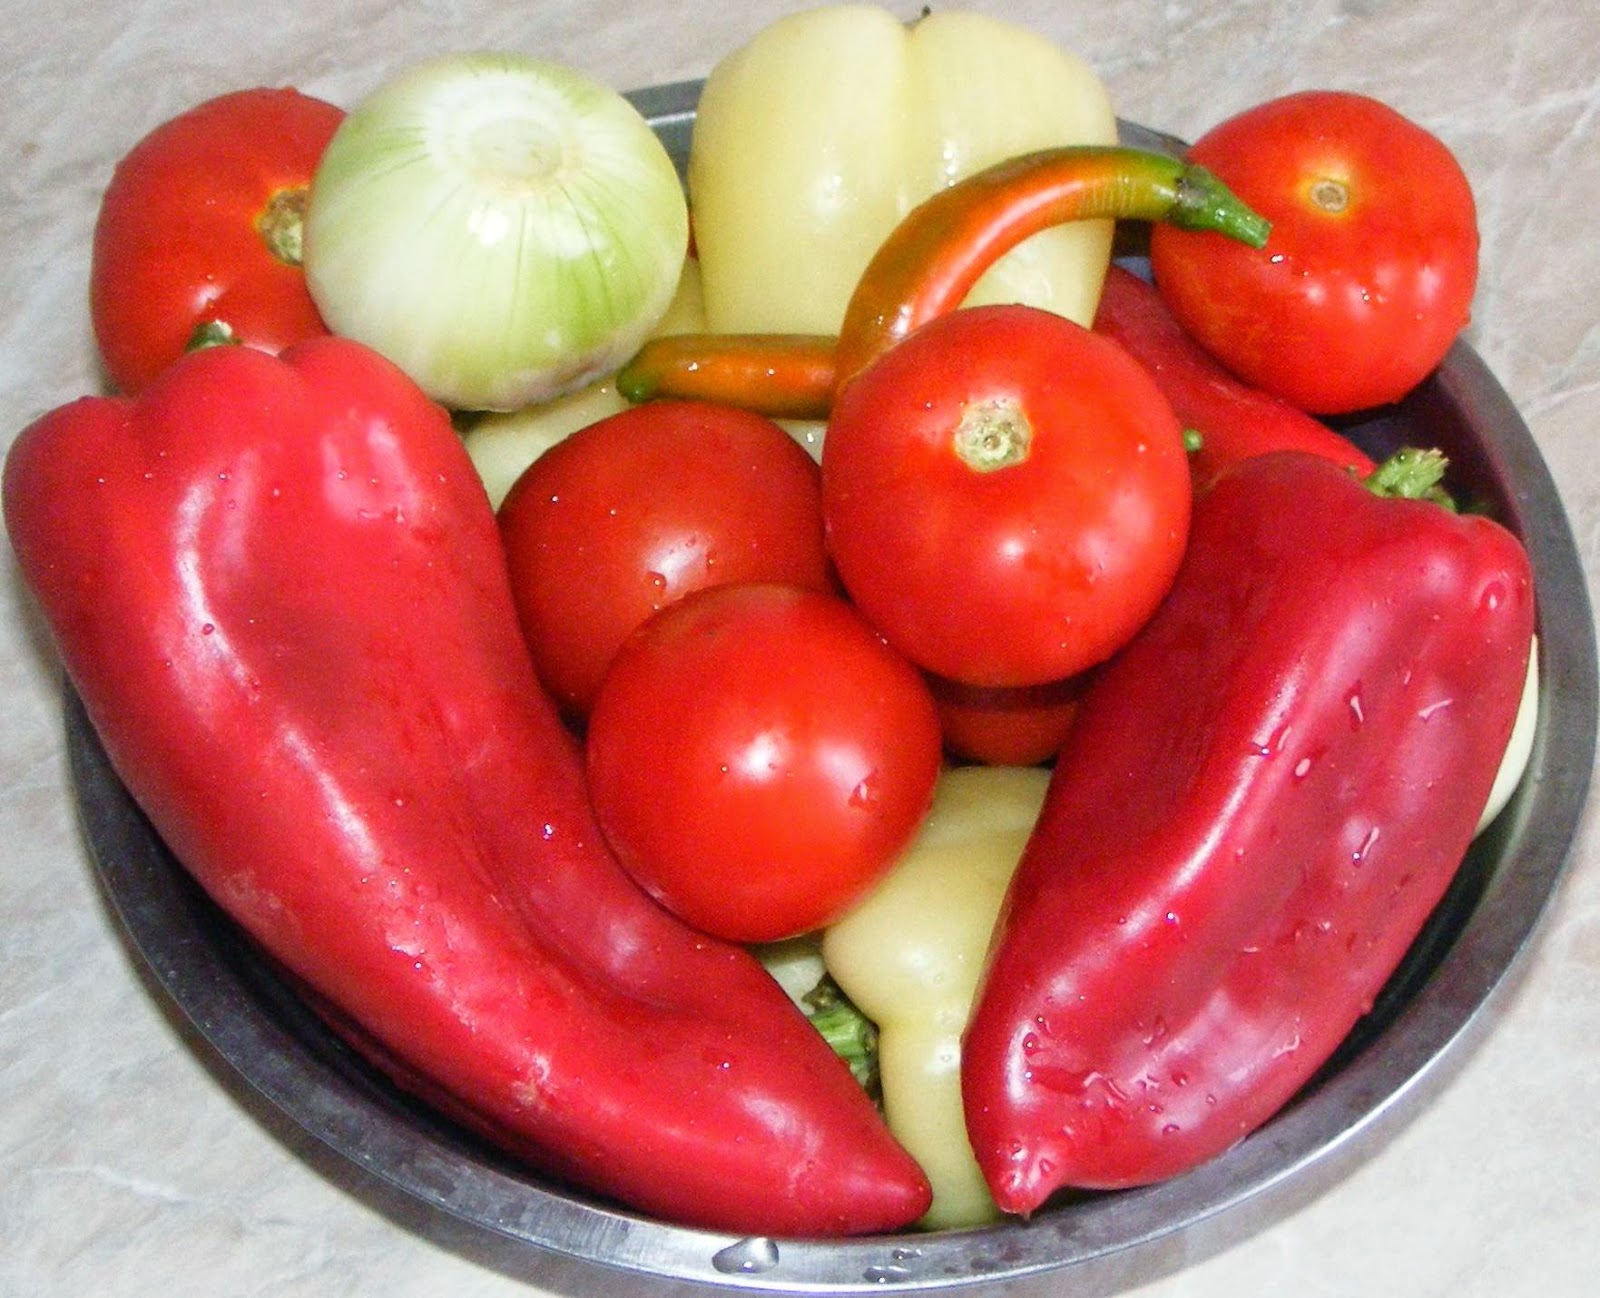 legume, legume de tara, legume proaspete, legume de tara proaspete pentru mancare, legume pentru gatit, retete si preparate culinare cu legume, legume pentru saksuka, 